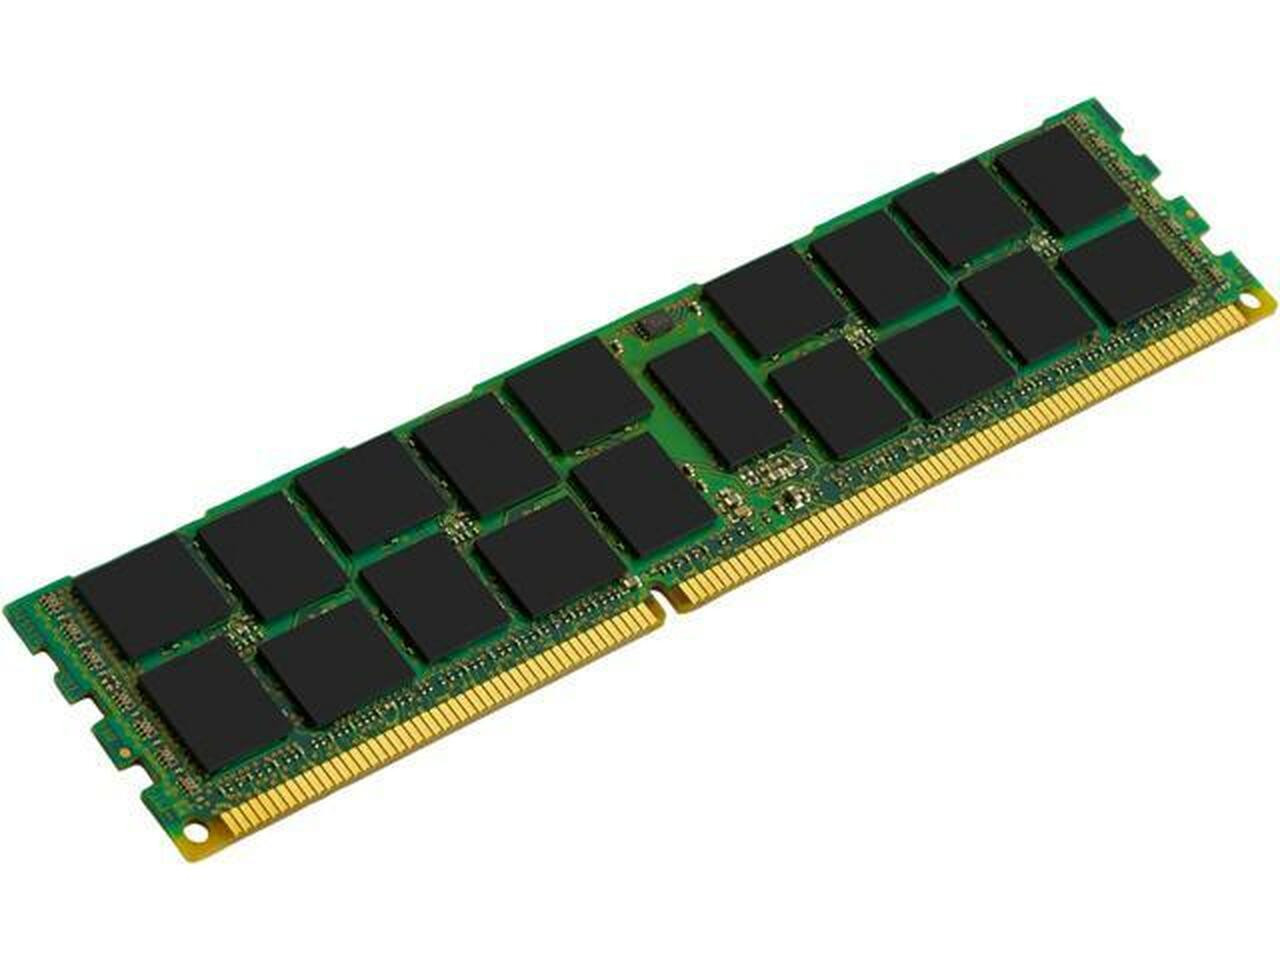 Netpatibles 32GB DDR4 SDRAM Memory Module - MEMDR432LCL02ER24NPM